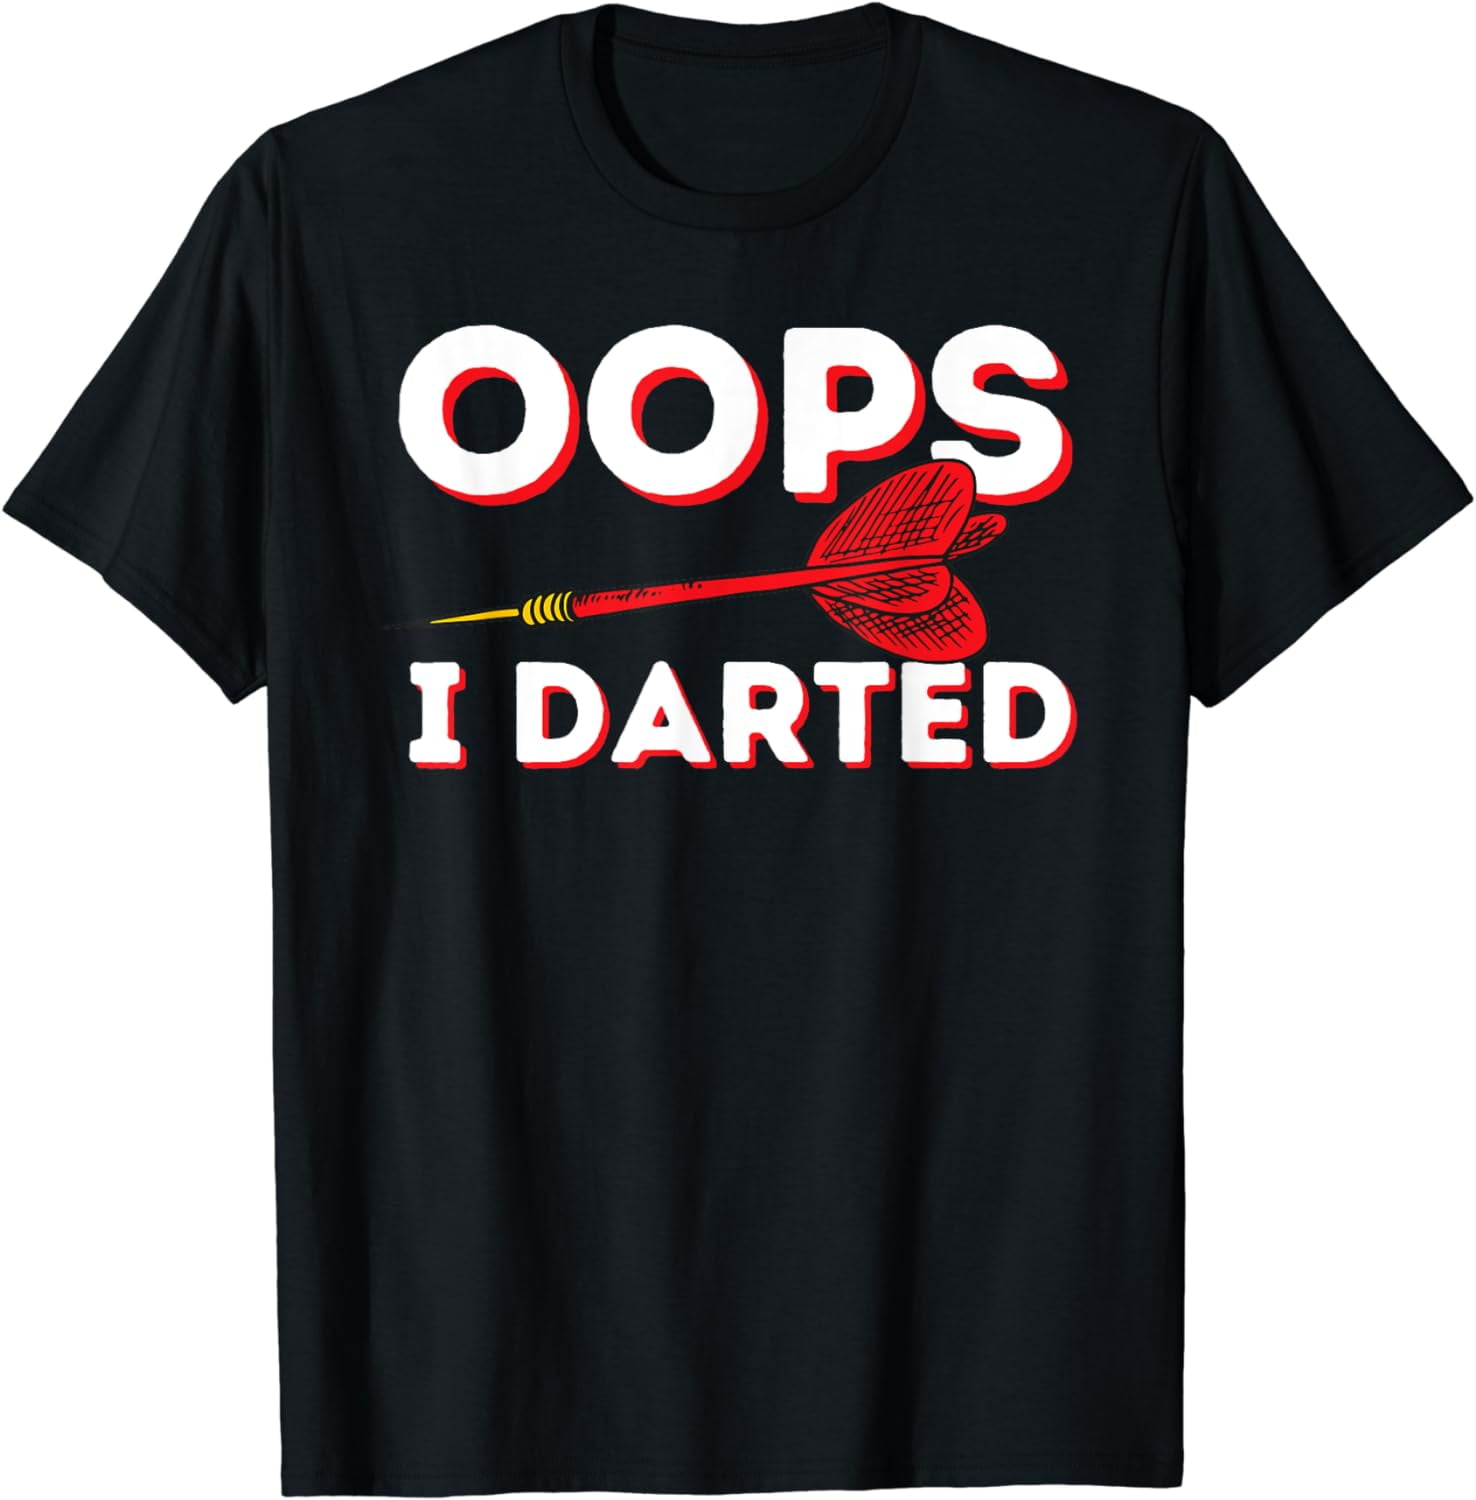 Oops, I darted - Funny Darts Club & Dart Player T-Shirt - Walmart.com